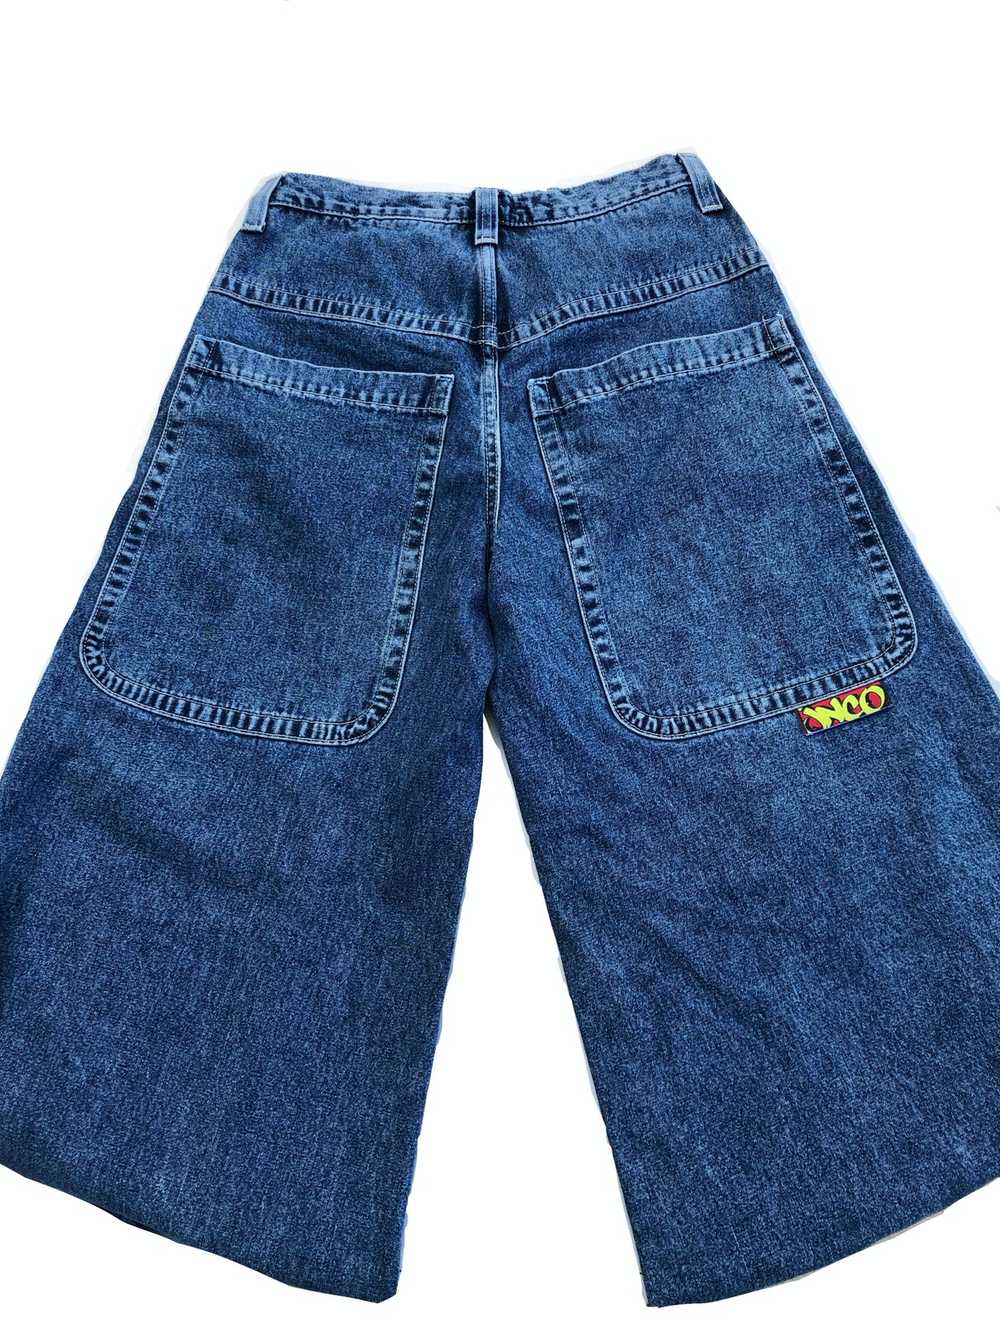 Jnco true vintage 90s JNCO jeans 🔥🔥 - image 1